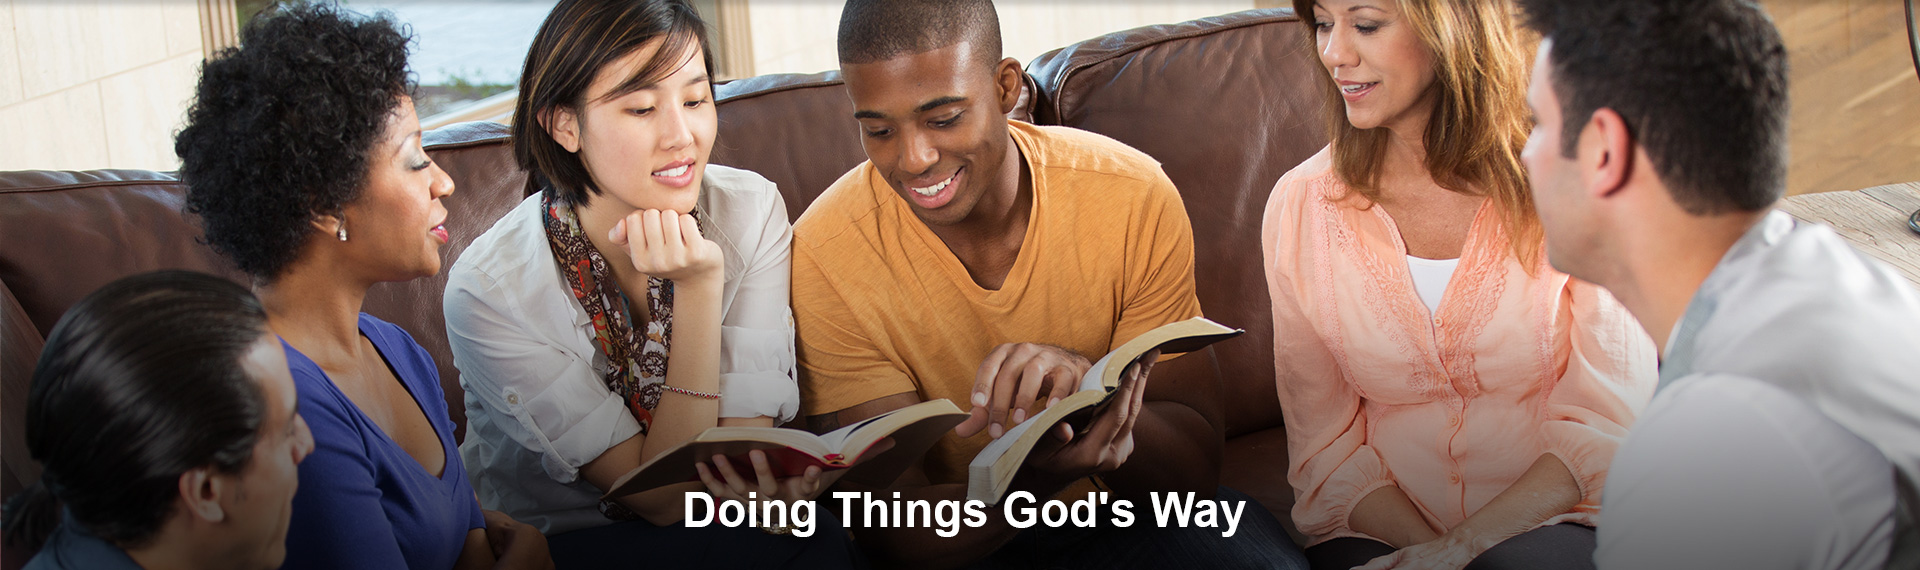 Doing Things God's Way